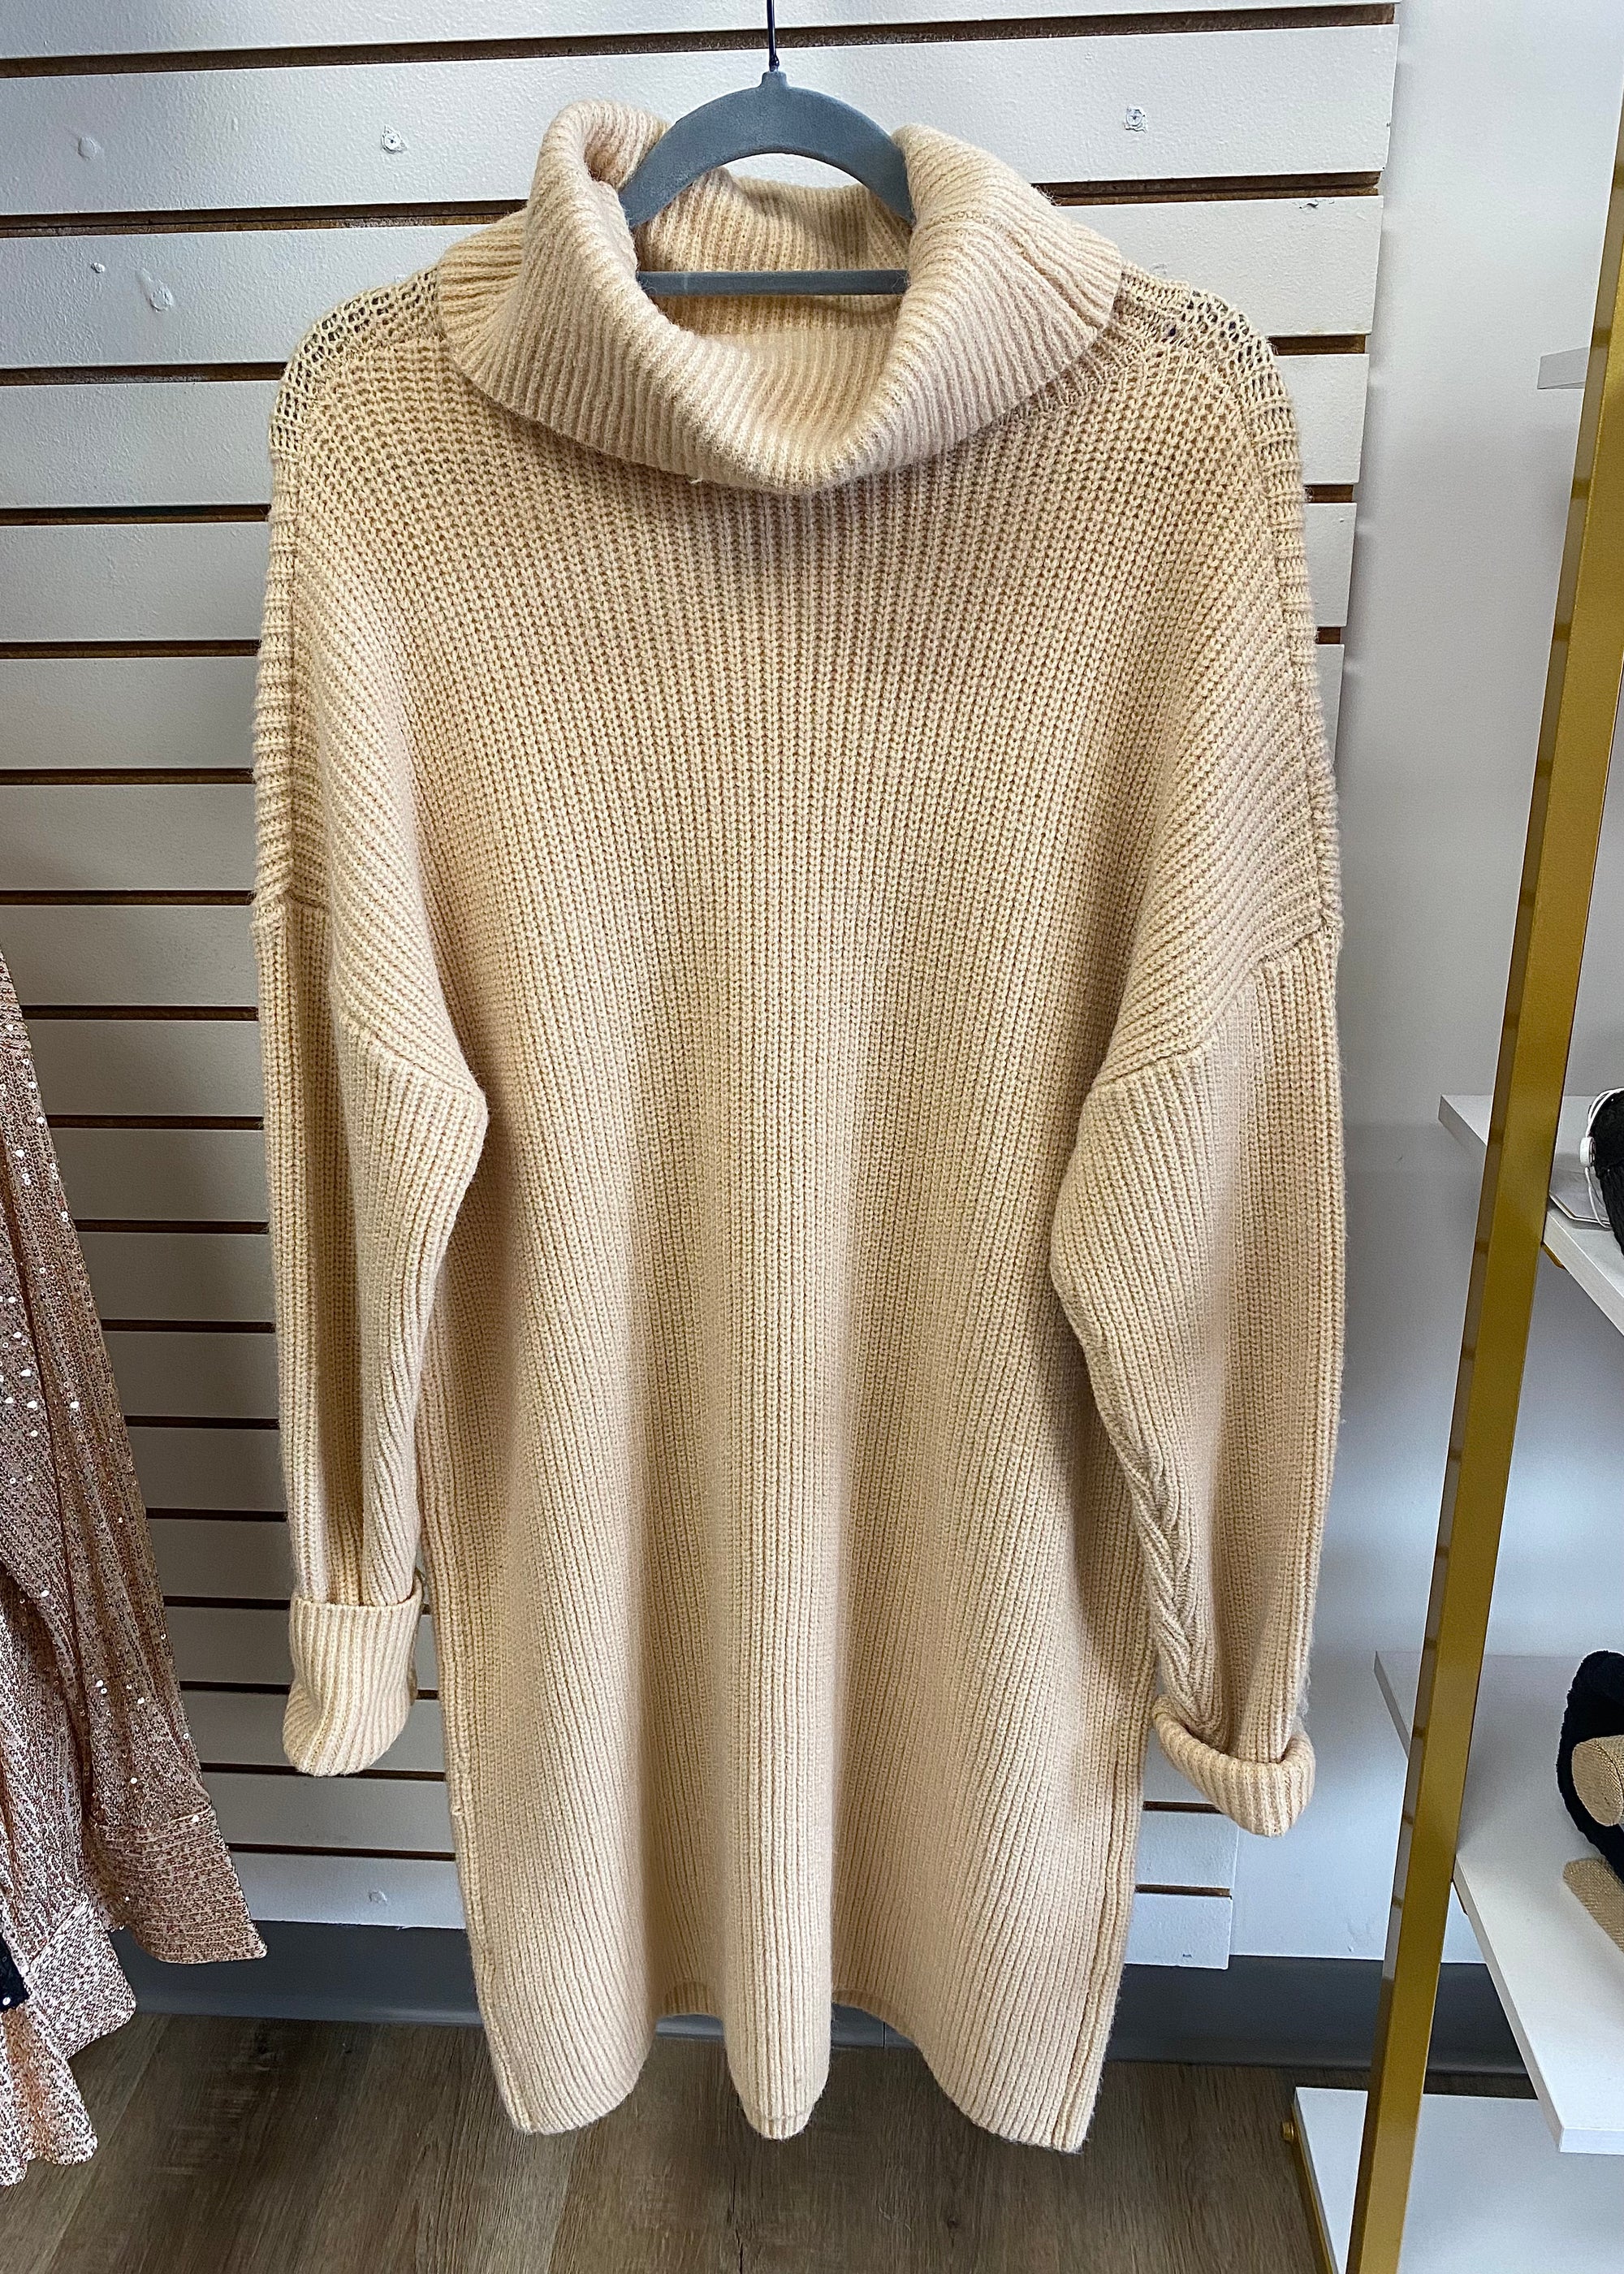 Sweater Dress - B3 Boutique, LLC